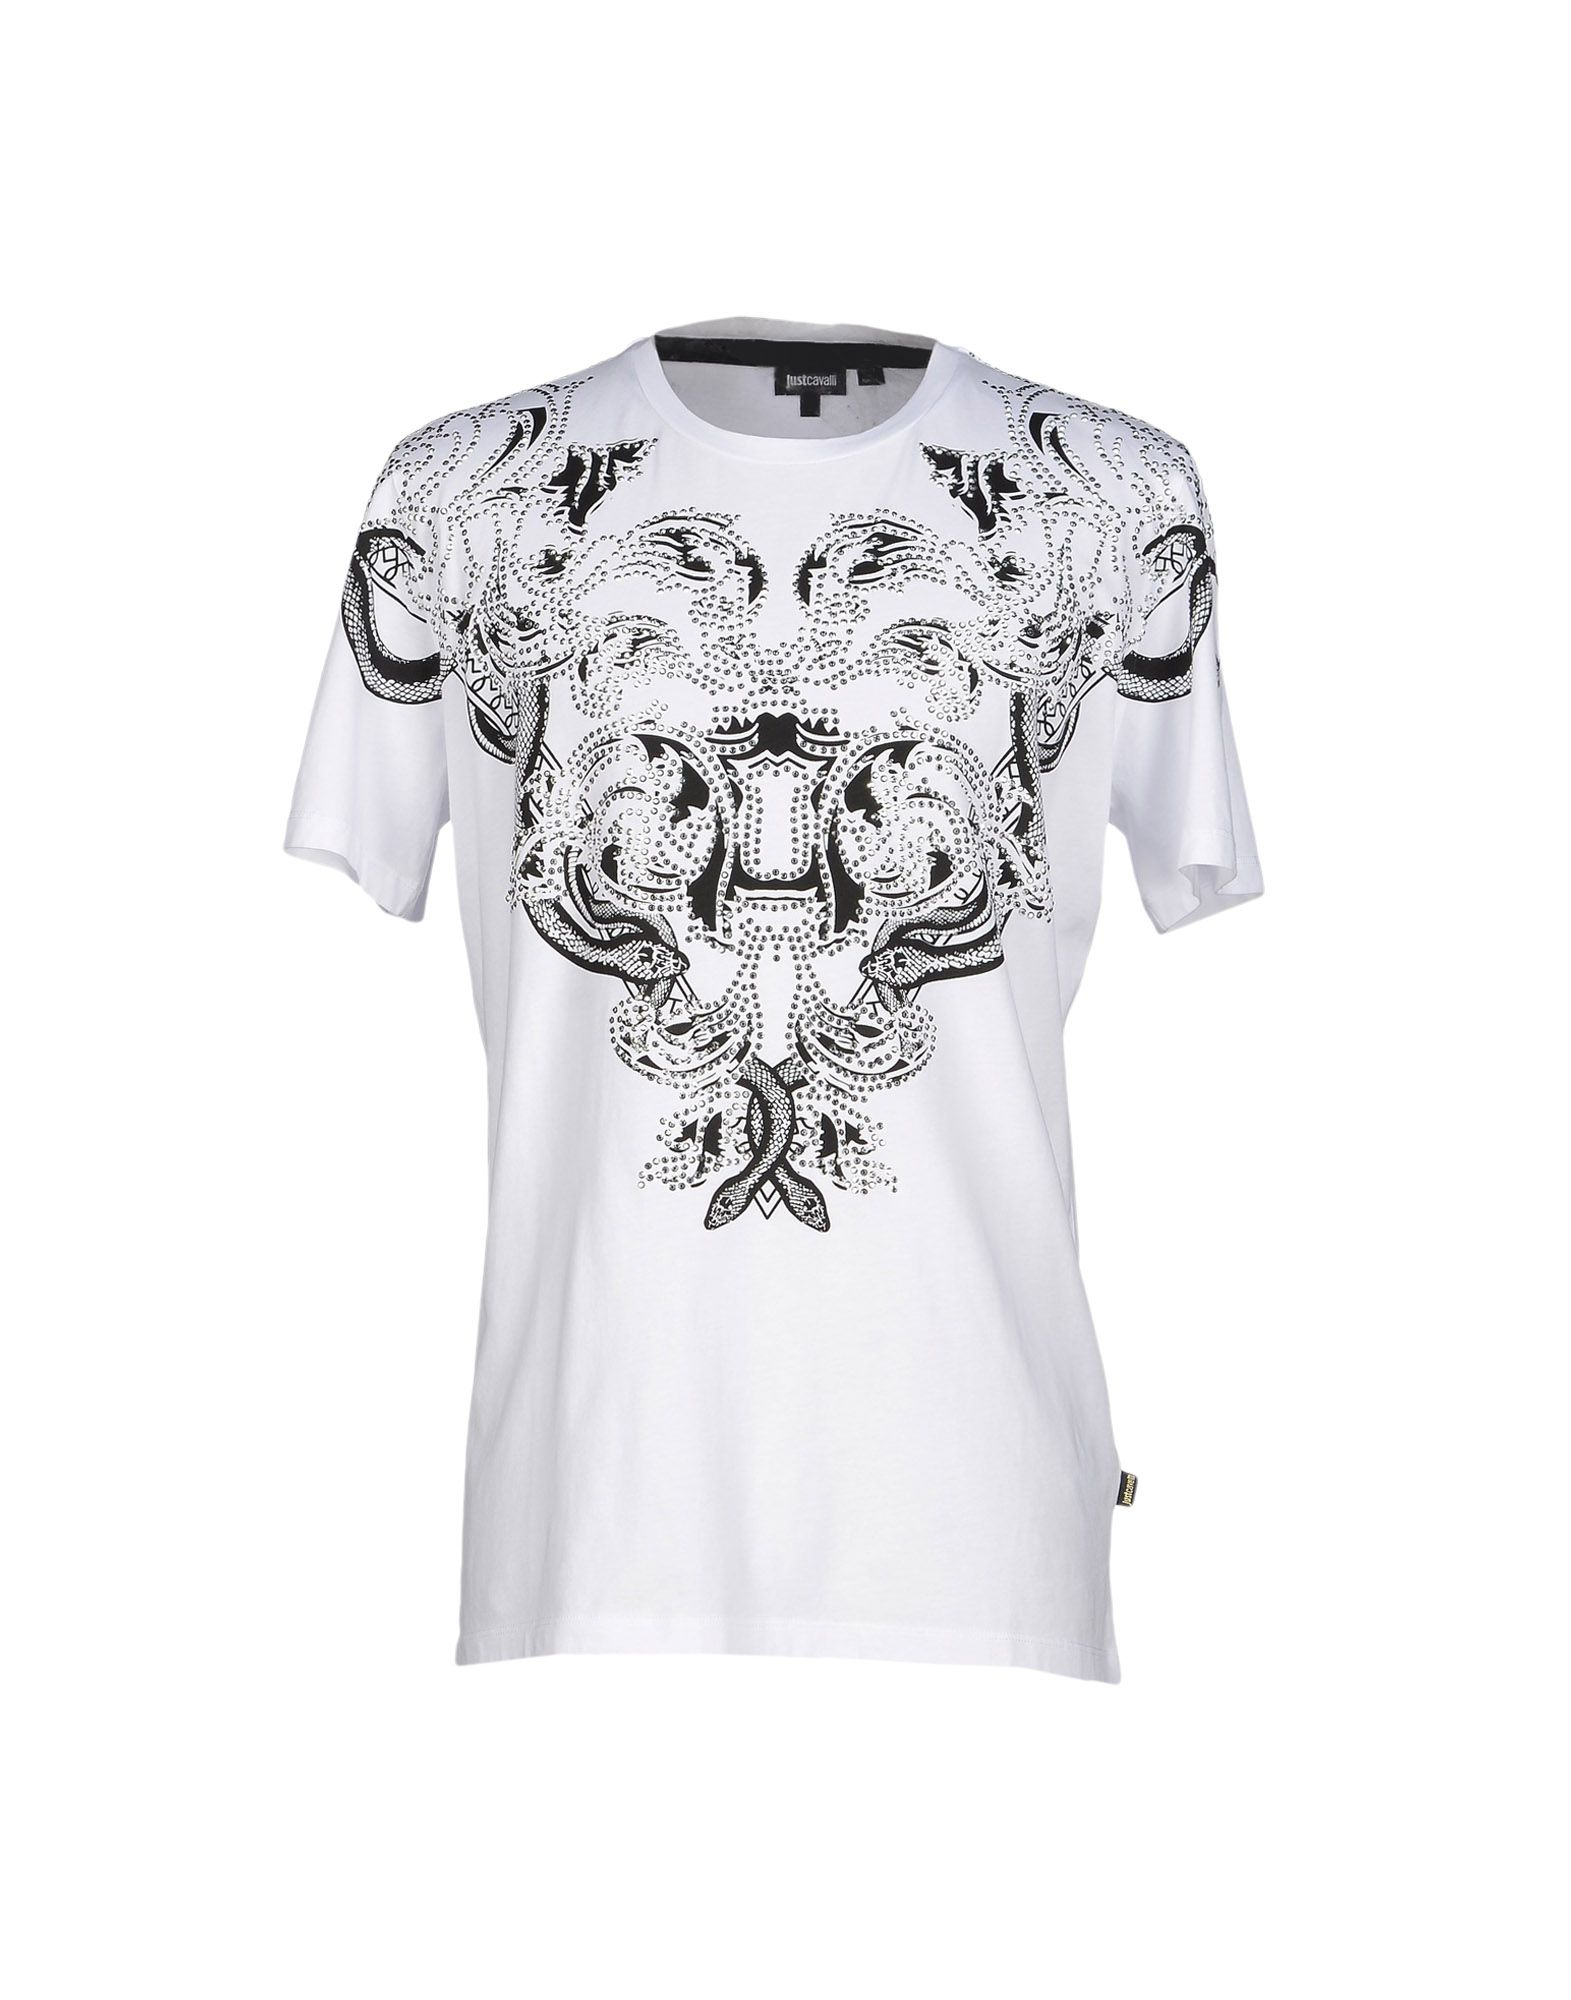 Lyst - Just Cavalli T-shirt in White for Men